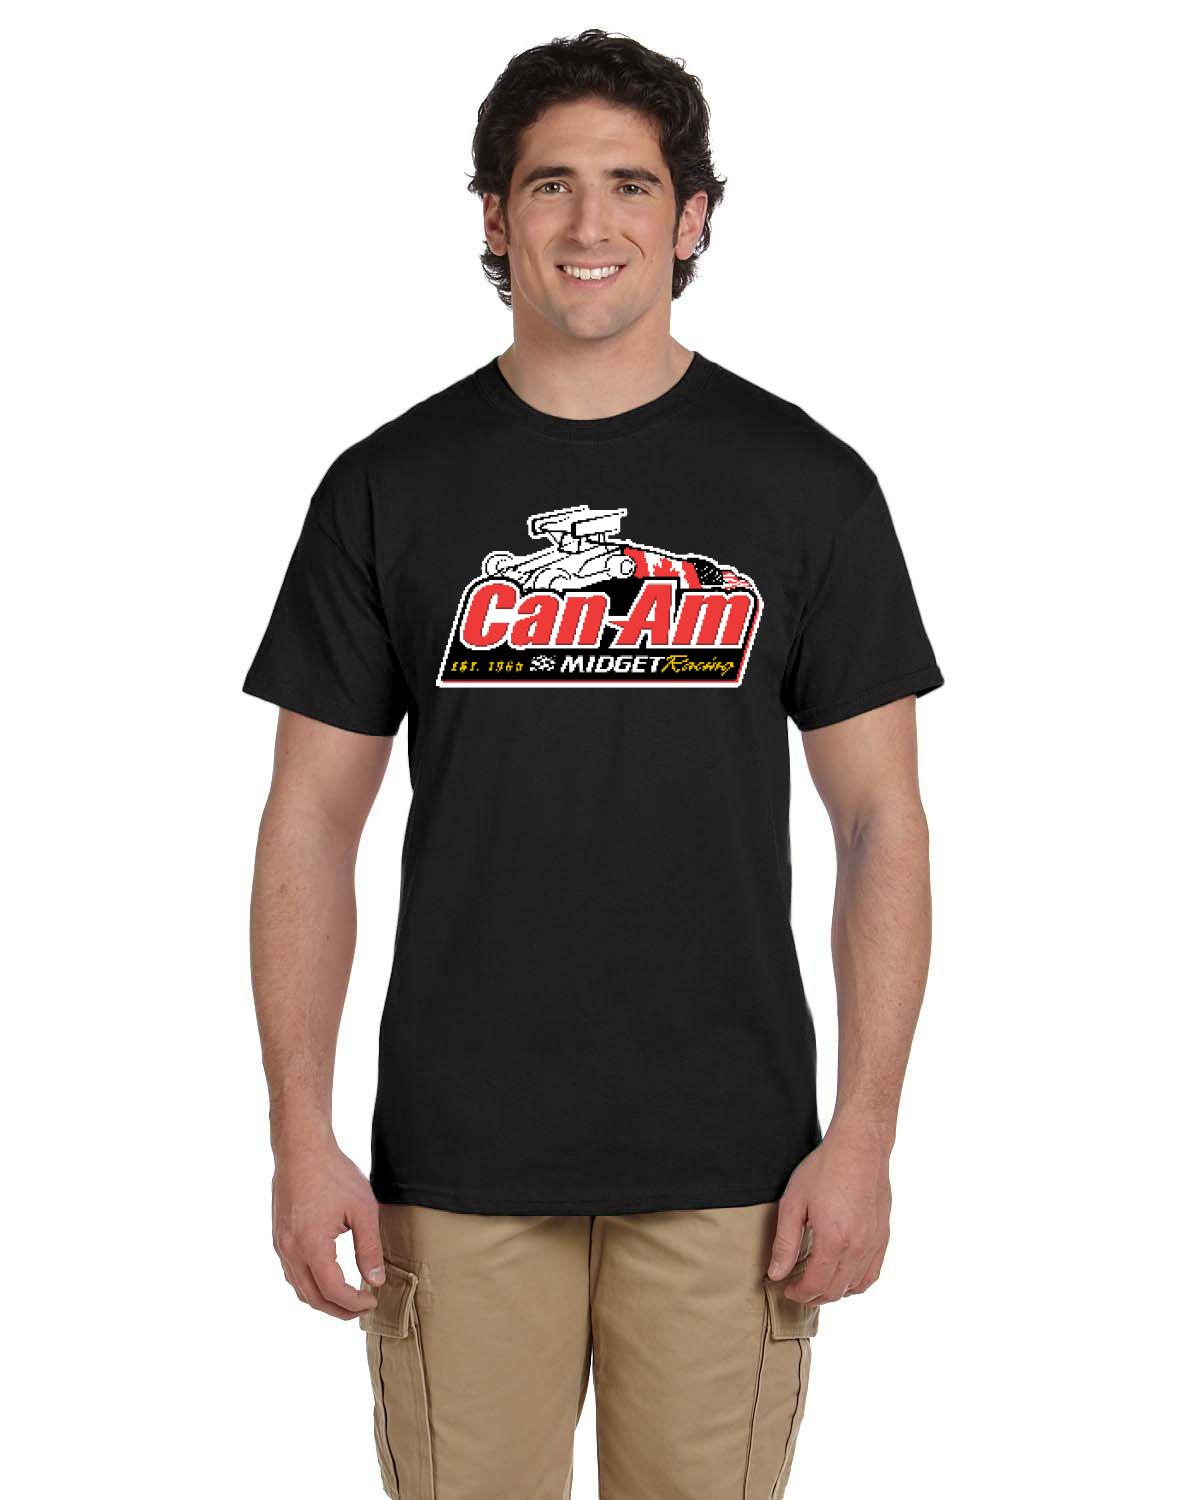 Can-Am Midget Racing Men's T-Shirt